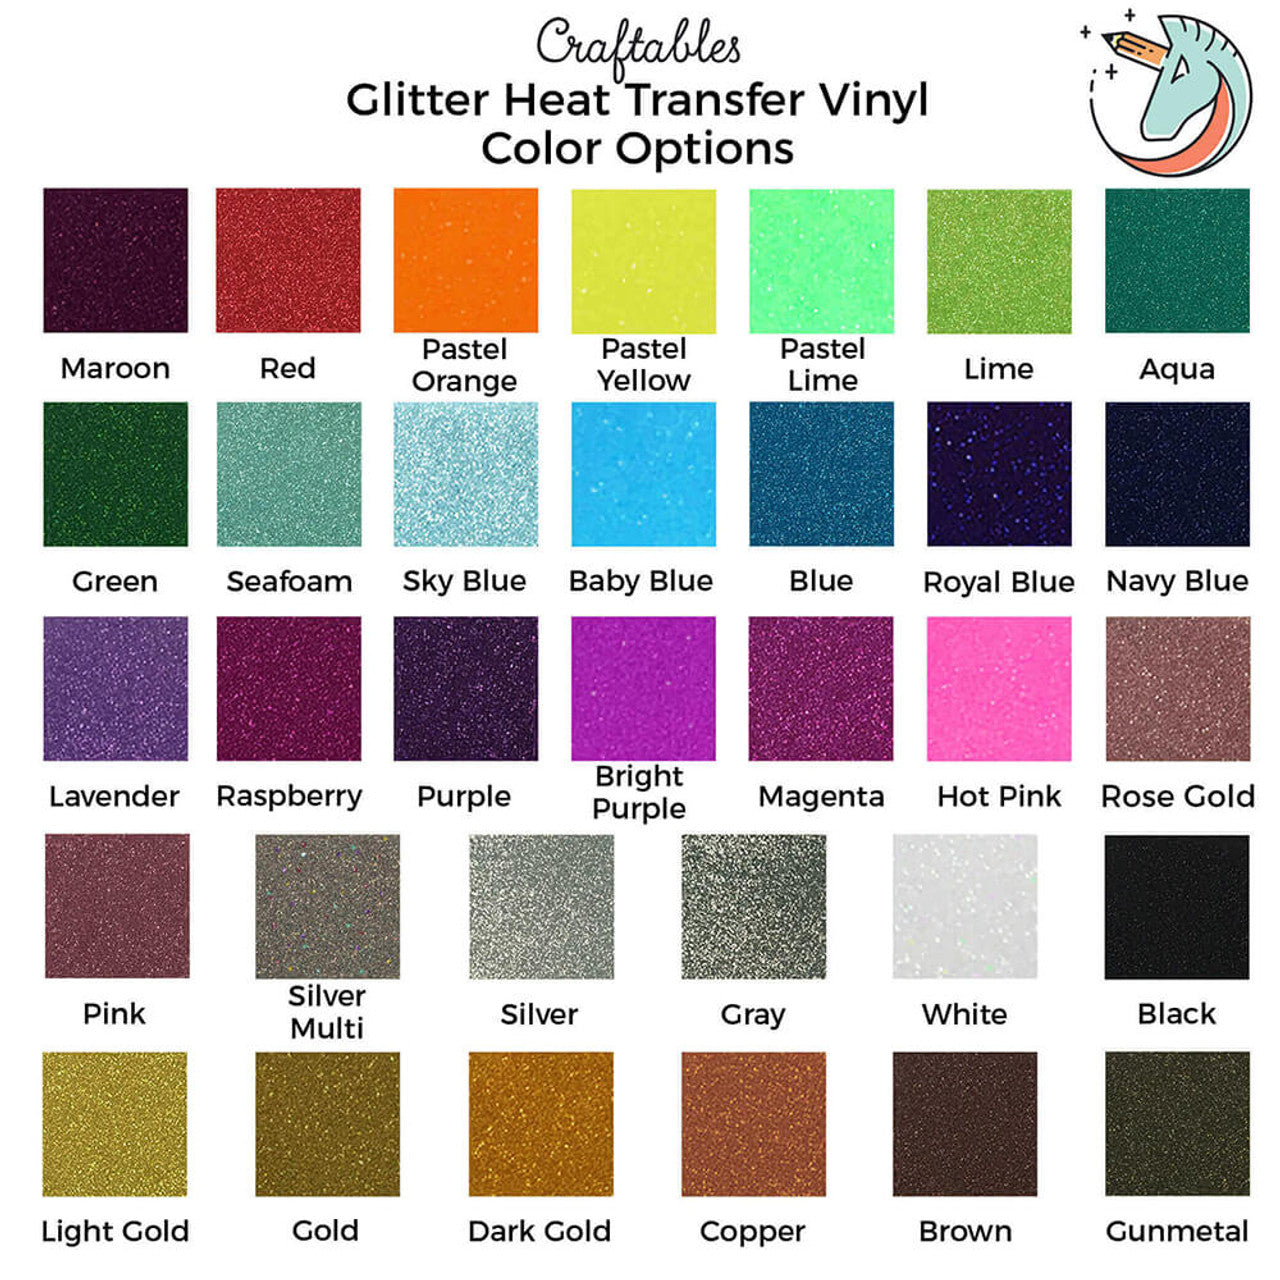 Bright Purple Glitter Heat Transfer Vinyl Rolls By Craftables